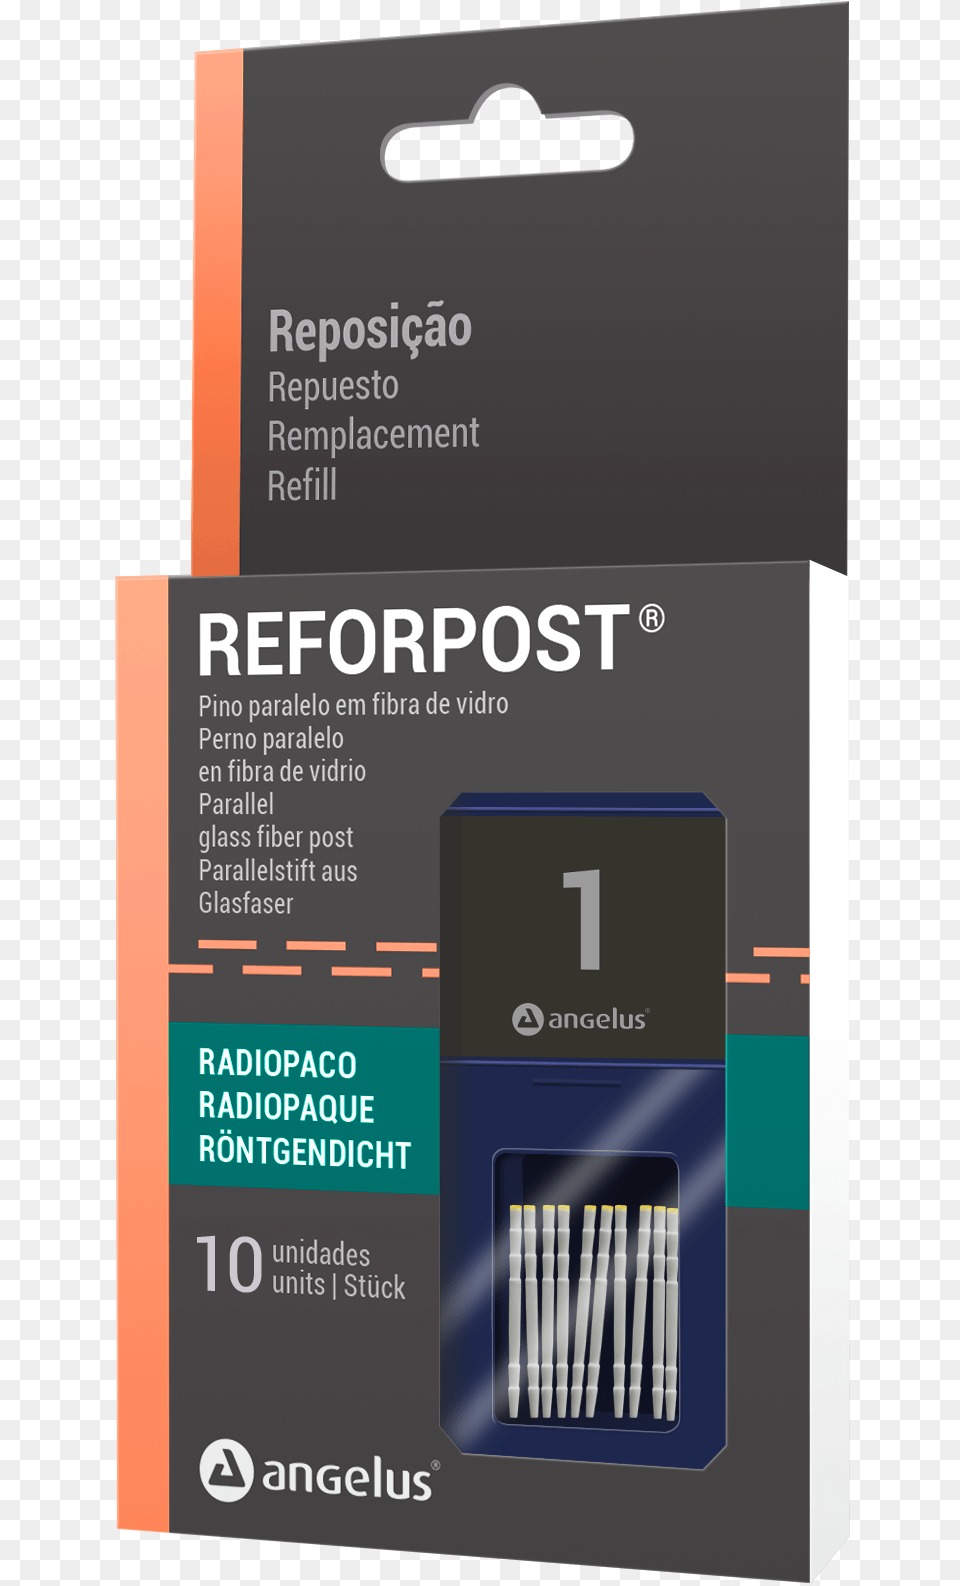 Pino Reforpost N 1 Angelus Postes De Fibra De Vidrio Angelus, Advertisement, Poster, Adapter, Electronics Free Transparent Png